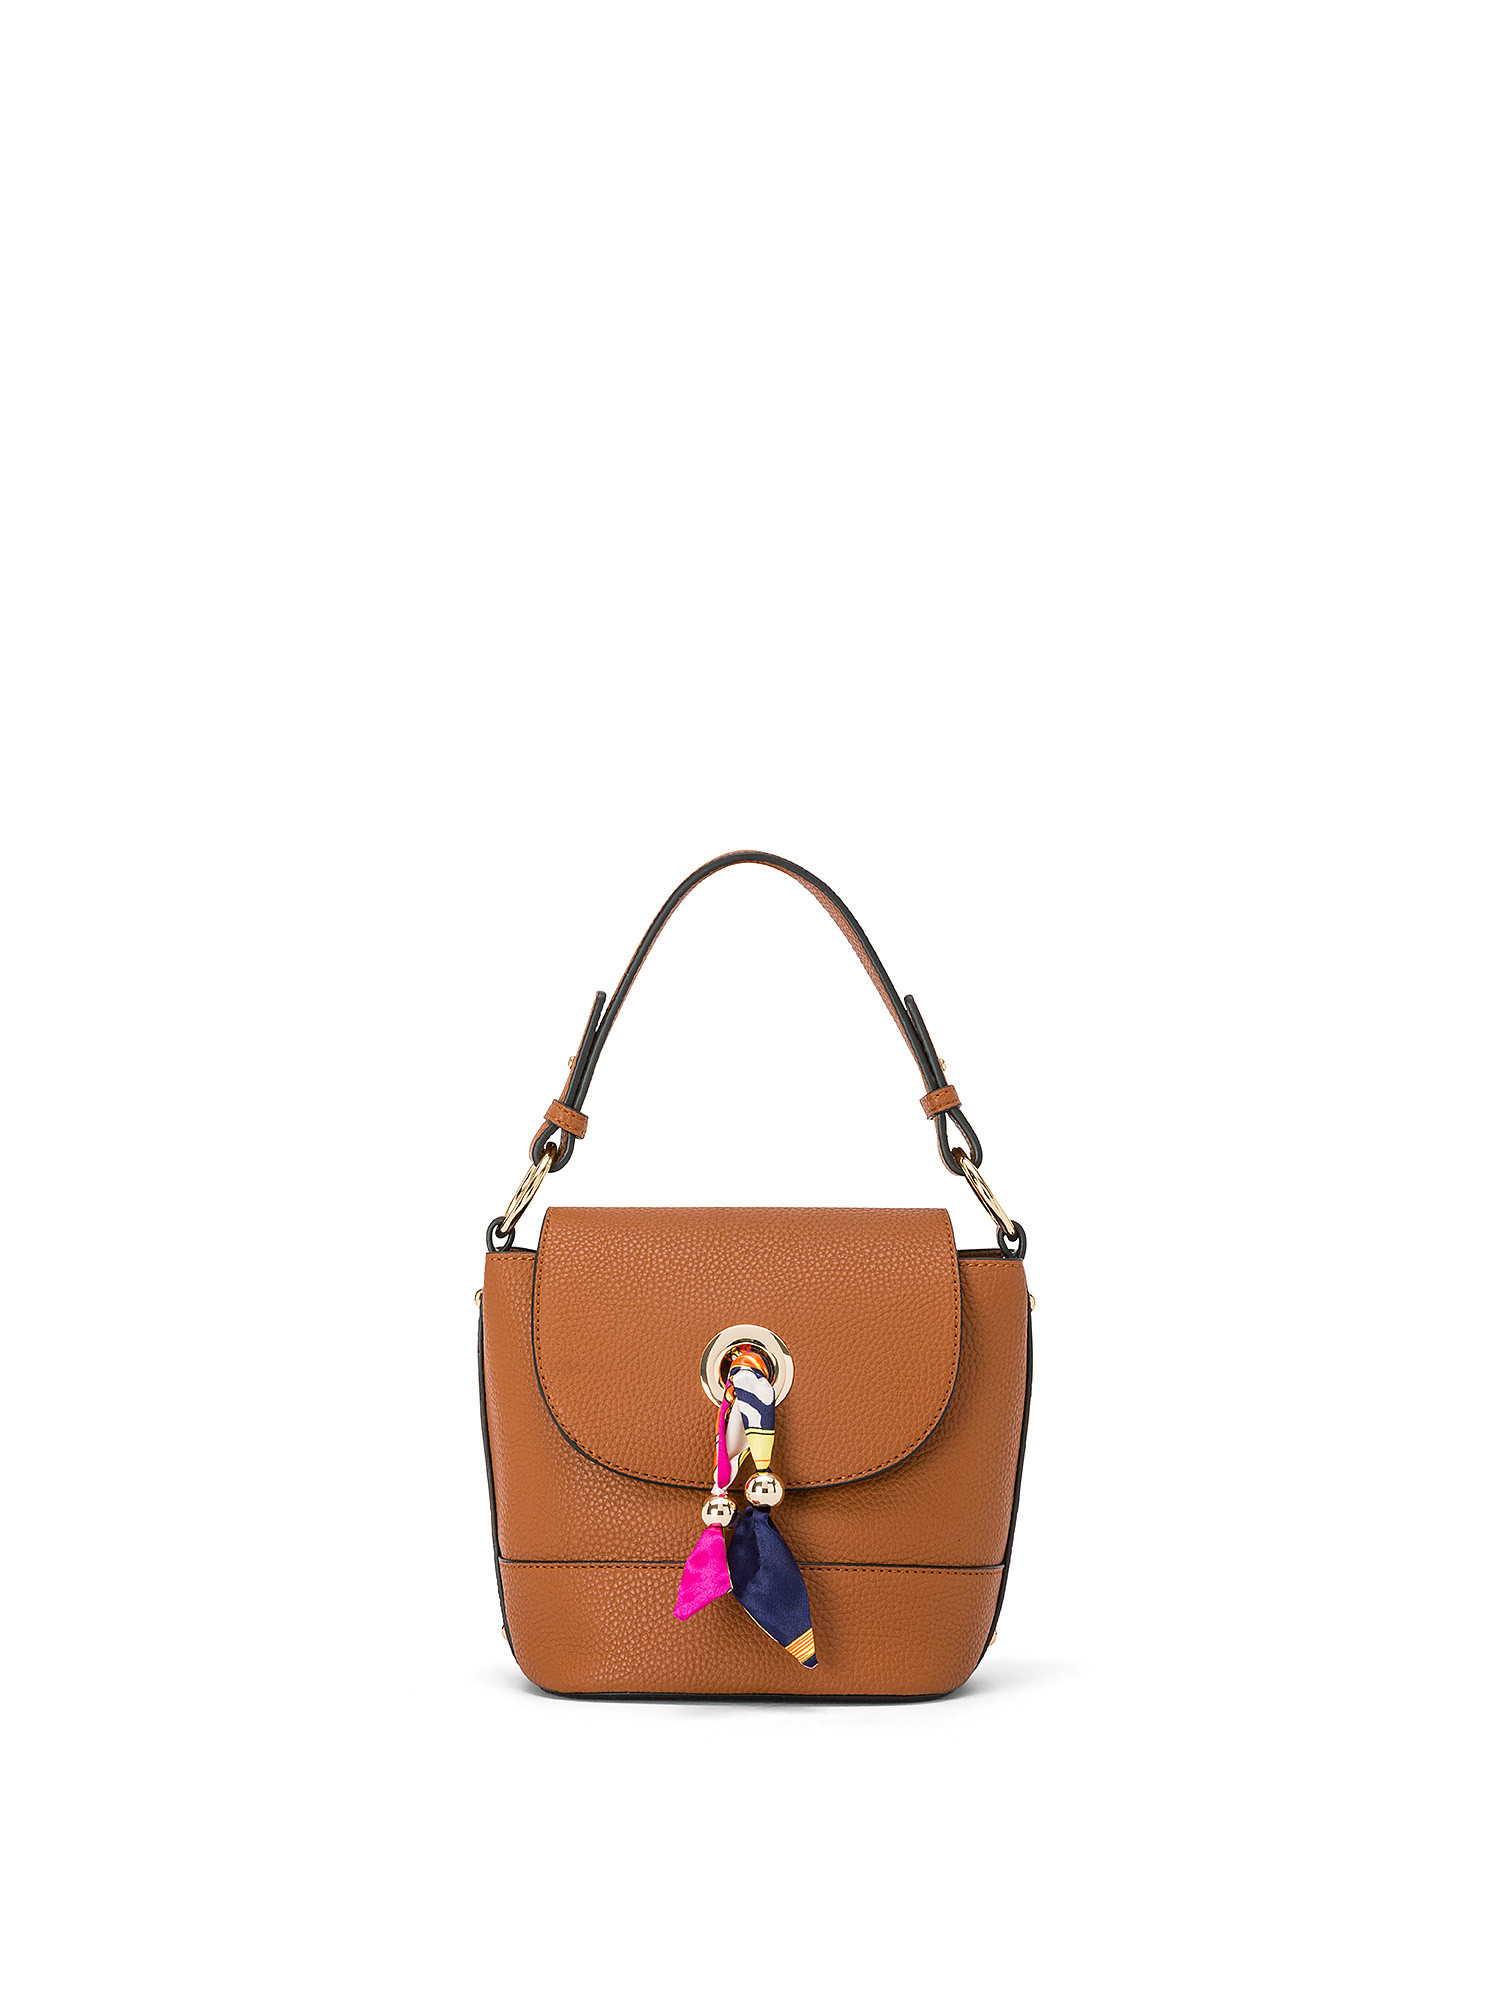 Koan - Handbag, Brown, large image number 0